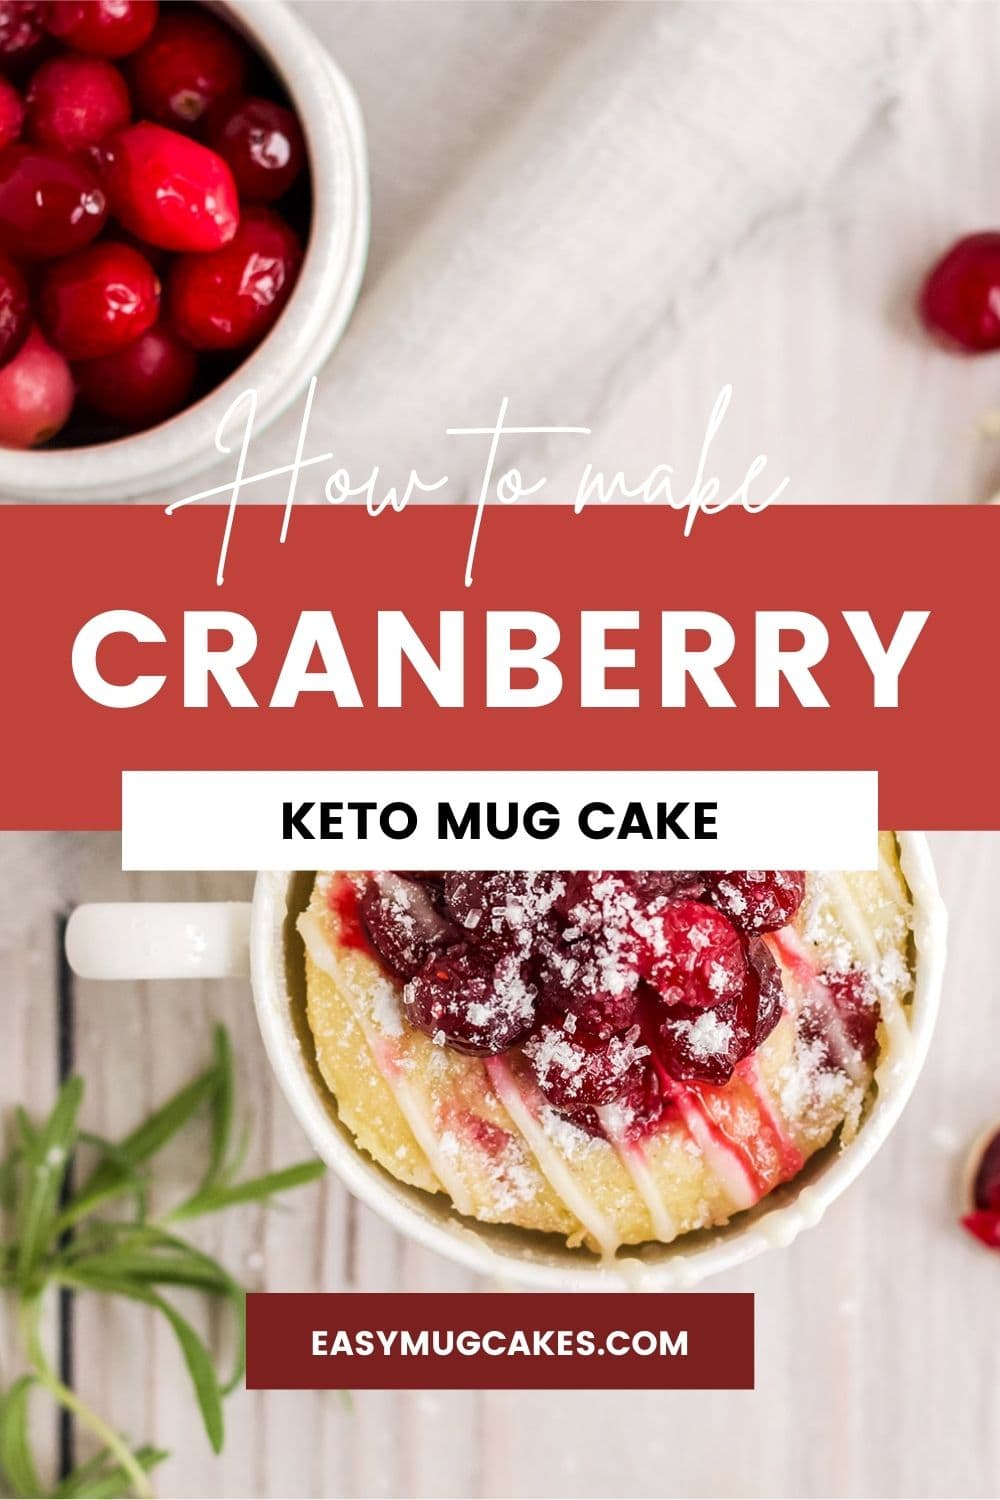 Cranberry mug cake and bowl of cranberries.